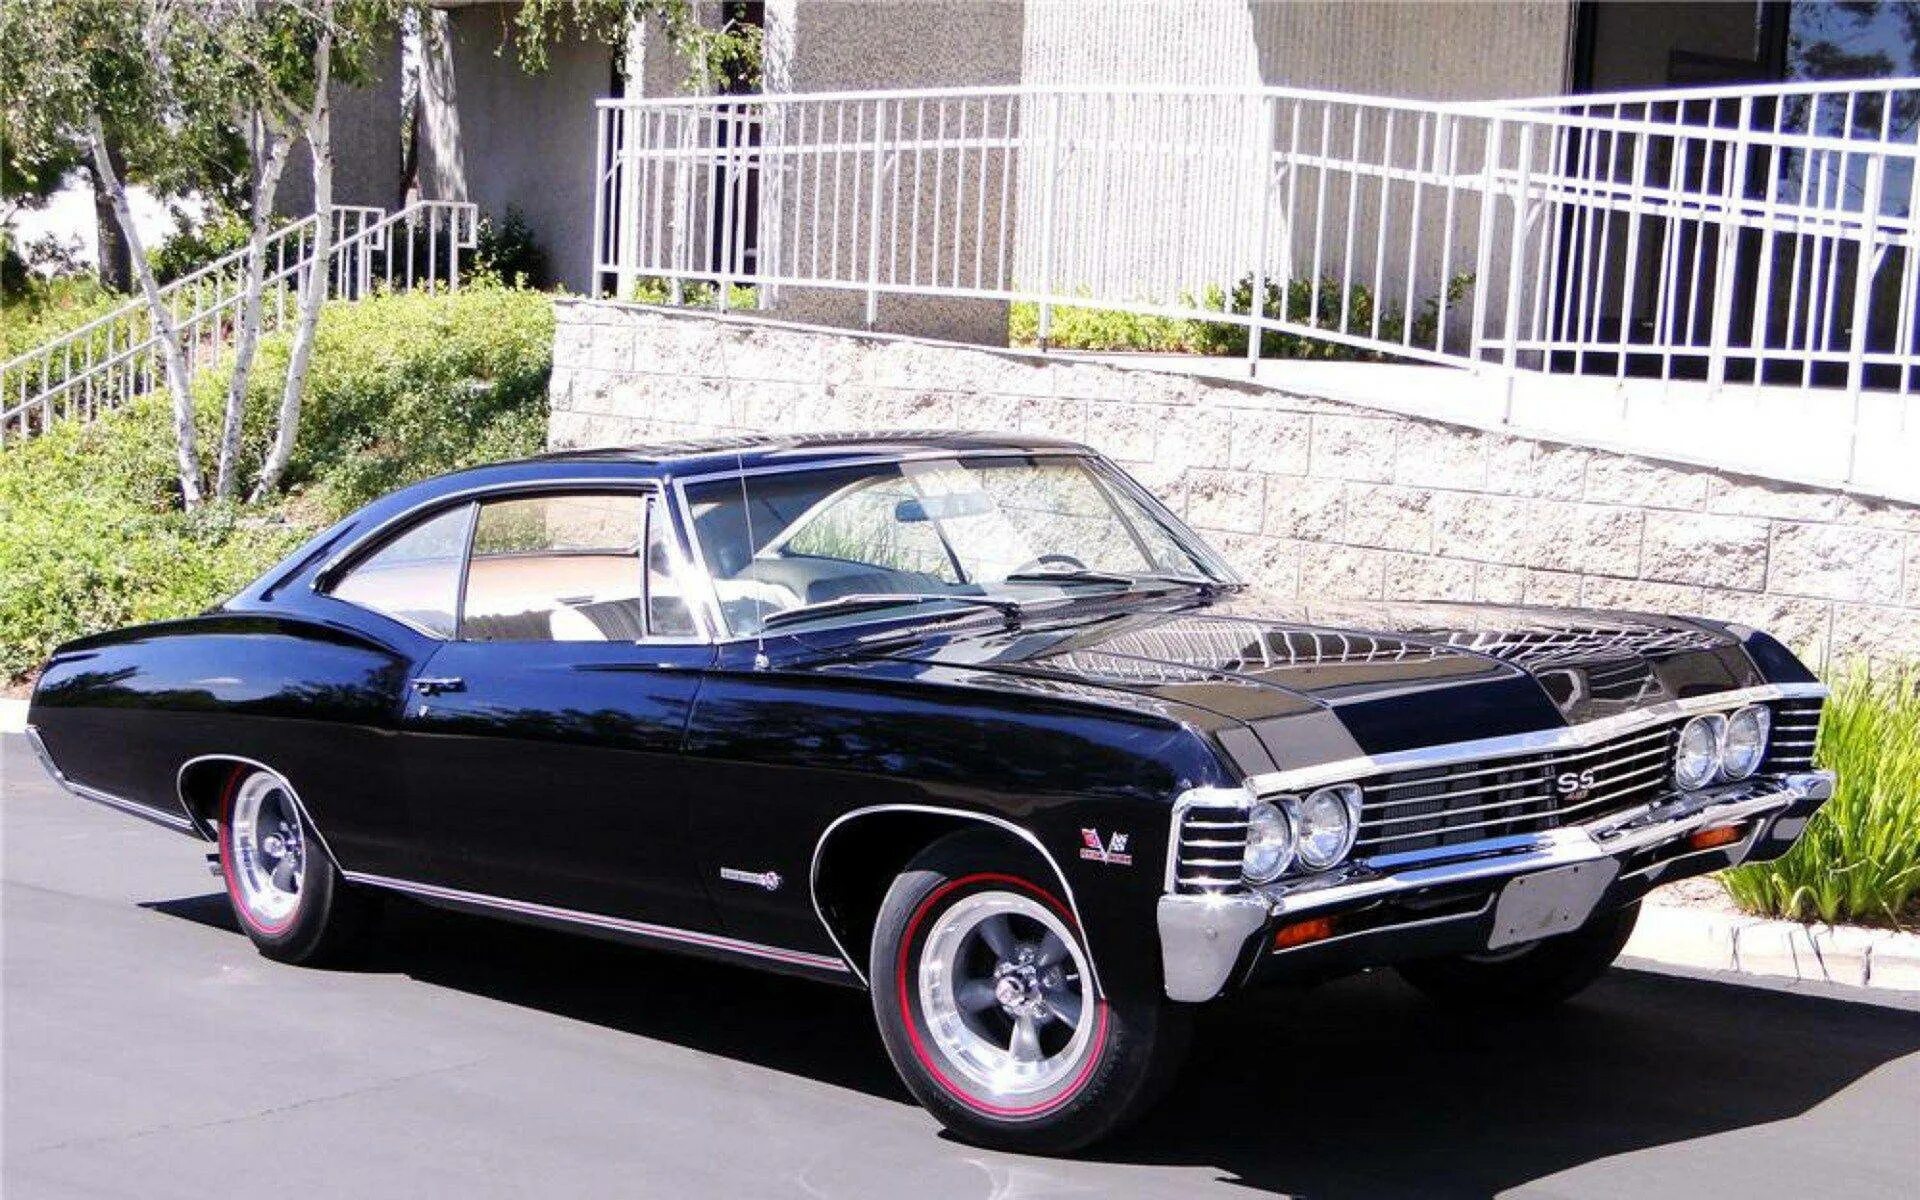 Chevrolet impala год. Шевроле Импала 1967. Chevrolet Impala SS 1967. Chevrolet Impala 1967 Hardtop. Chevrolet Impala 67.